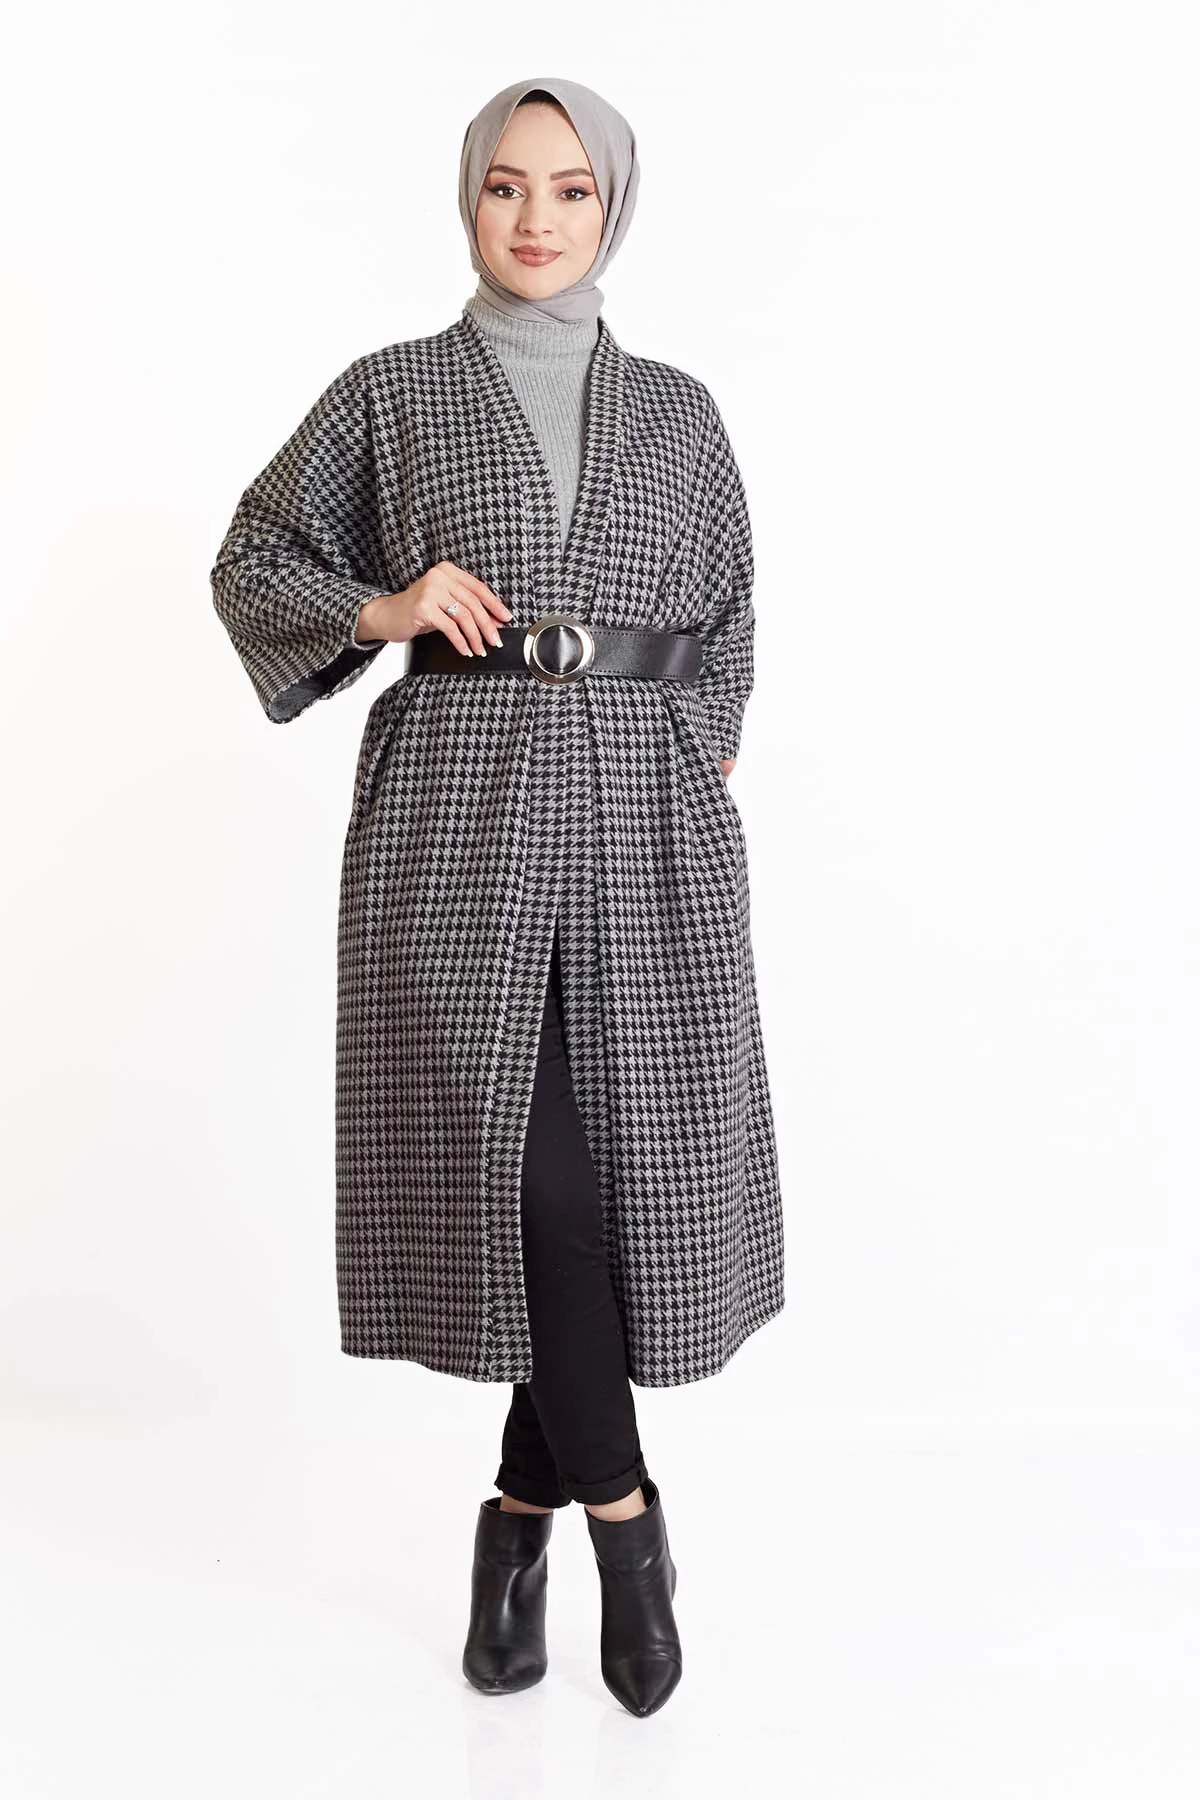 

TUGBA Muslim Female Arched Cap Kimono Anthracite Cardigan İslamic Muslim clothes for Turkiye